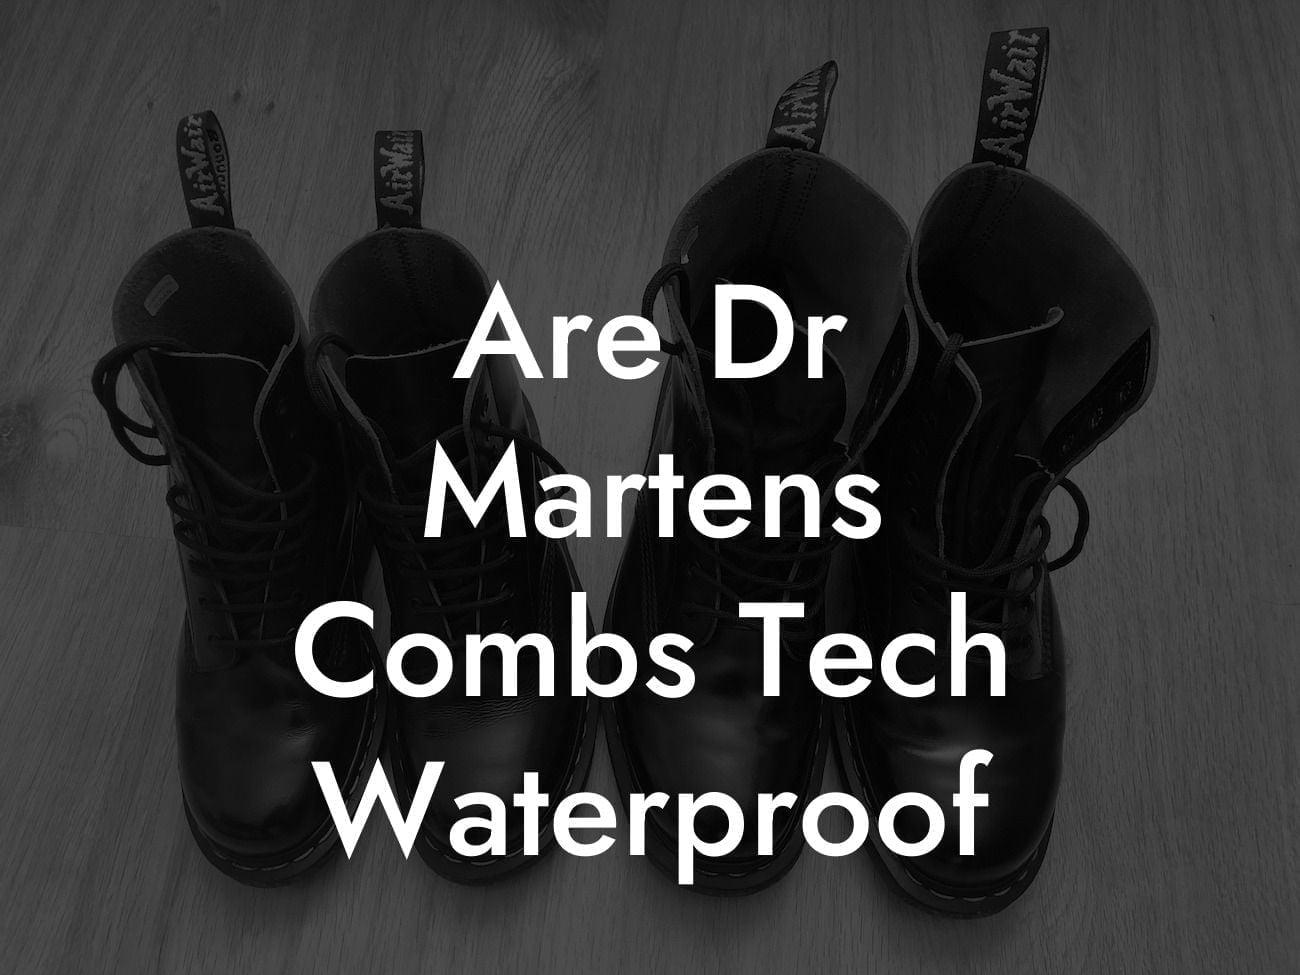 Are Dr Martens Combs Tech Waterproof